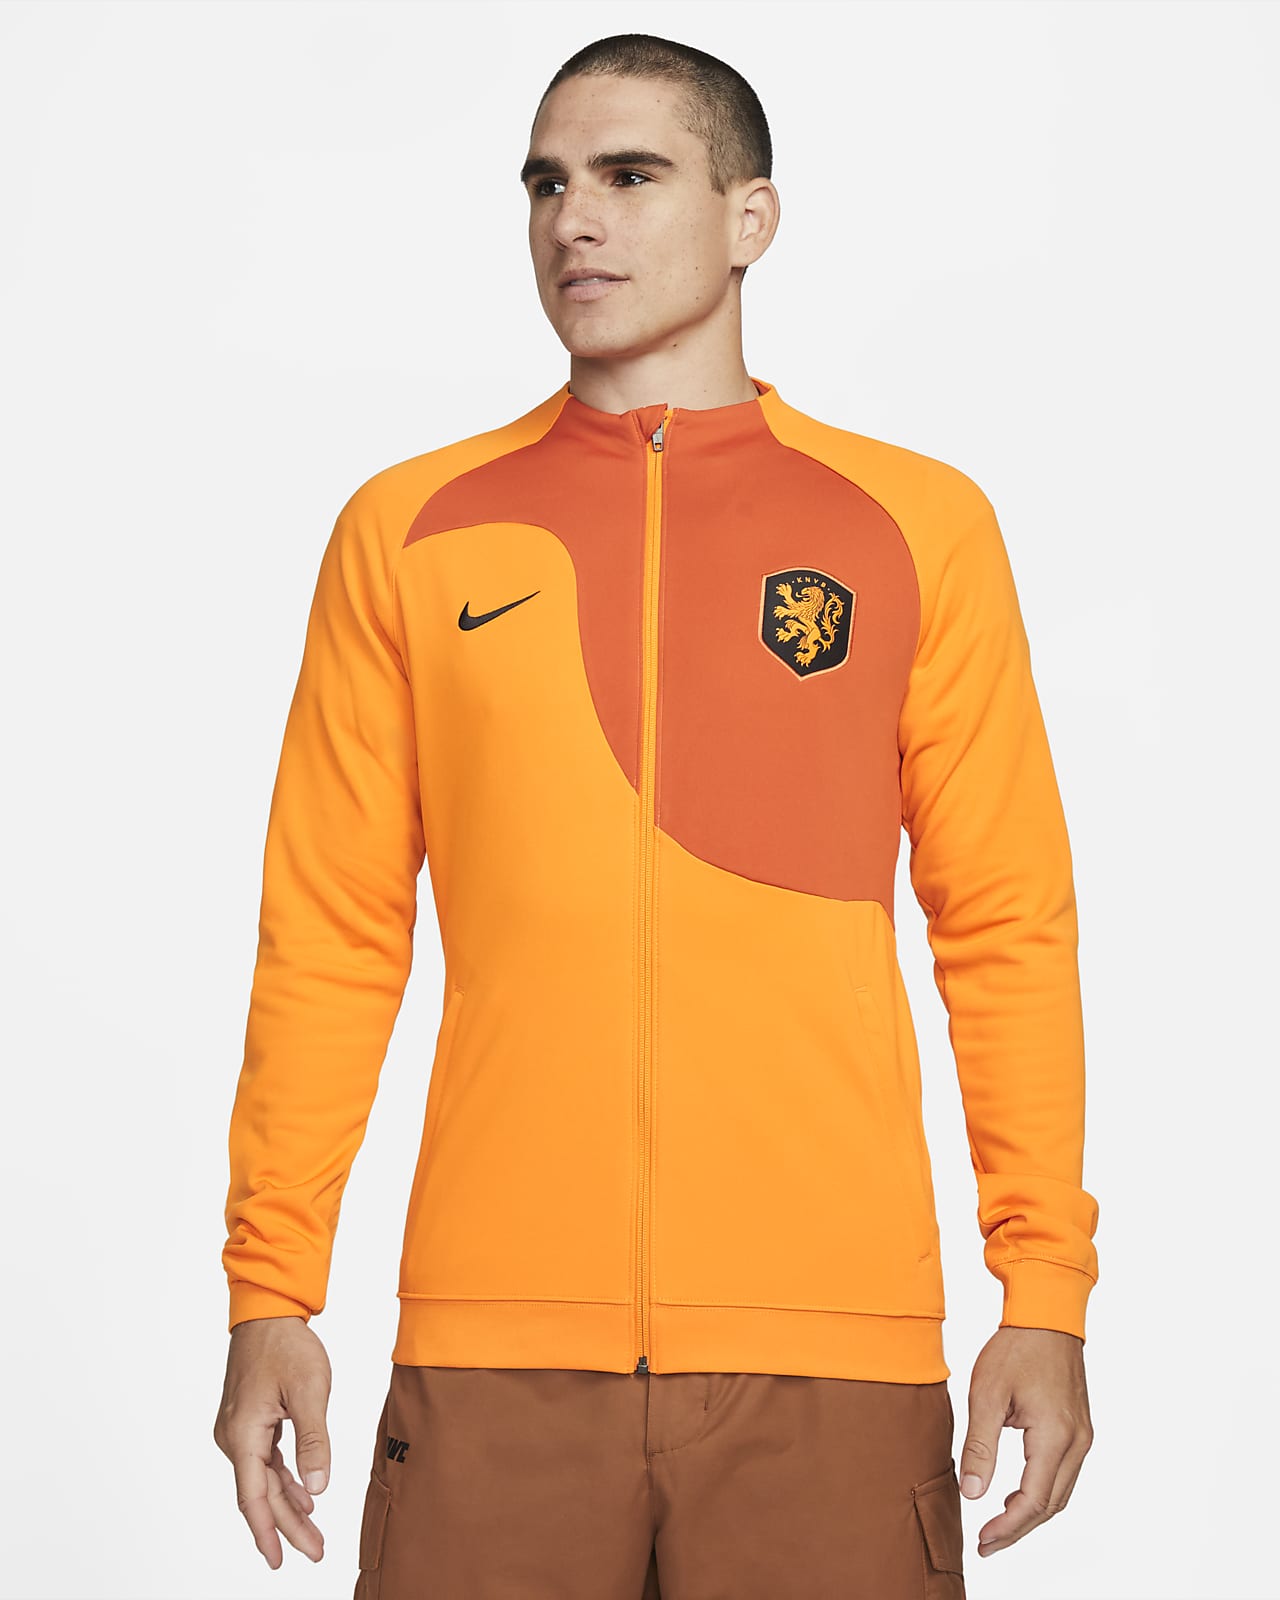 ijzer Discriminerend presentatie Netherlands Academy Pro Men's Knit Soccer Jacket. Nike.com